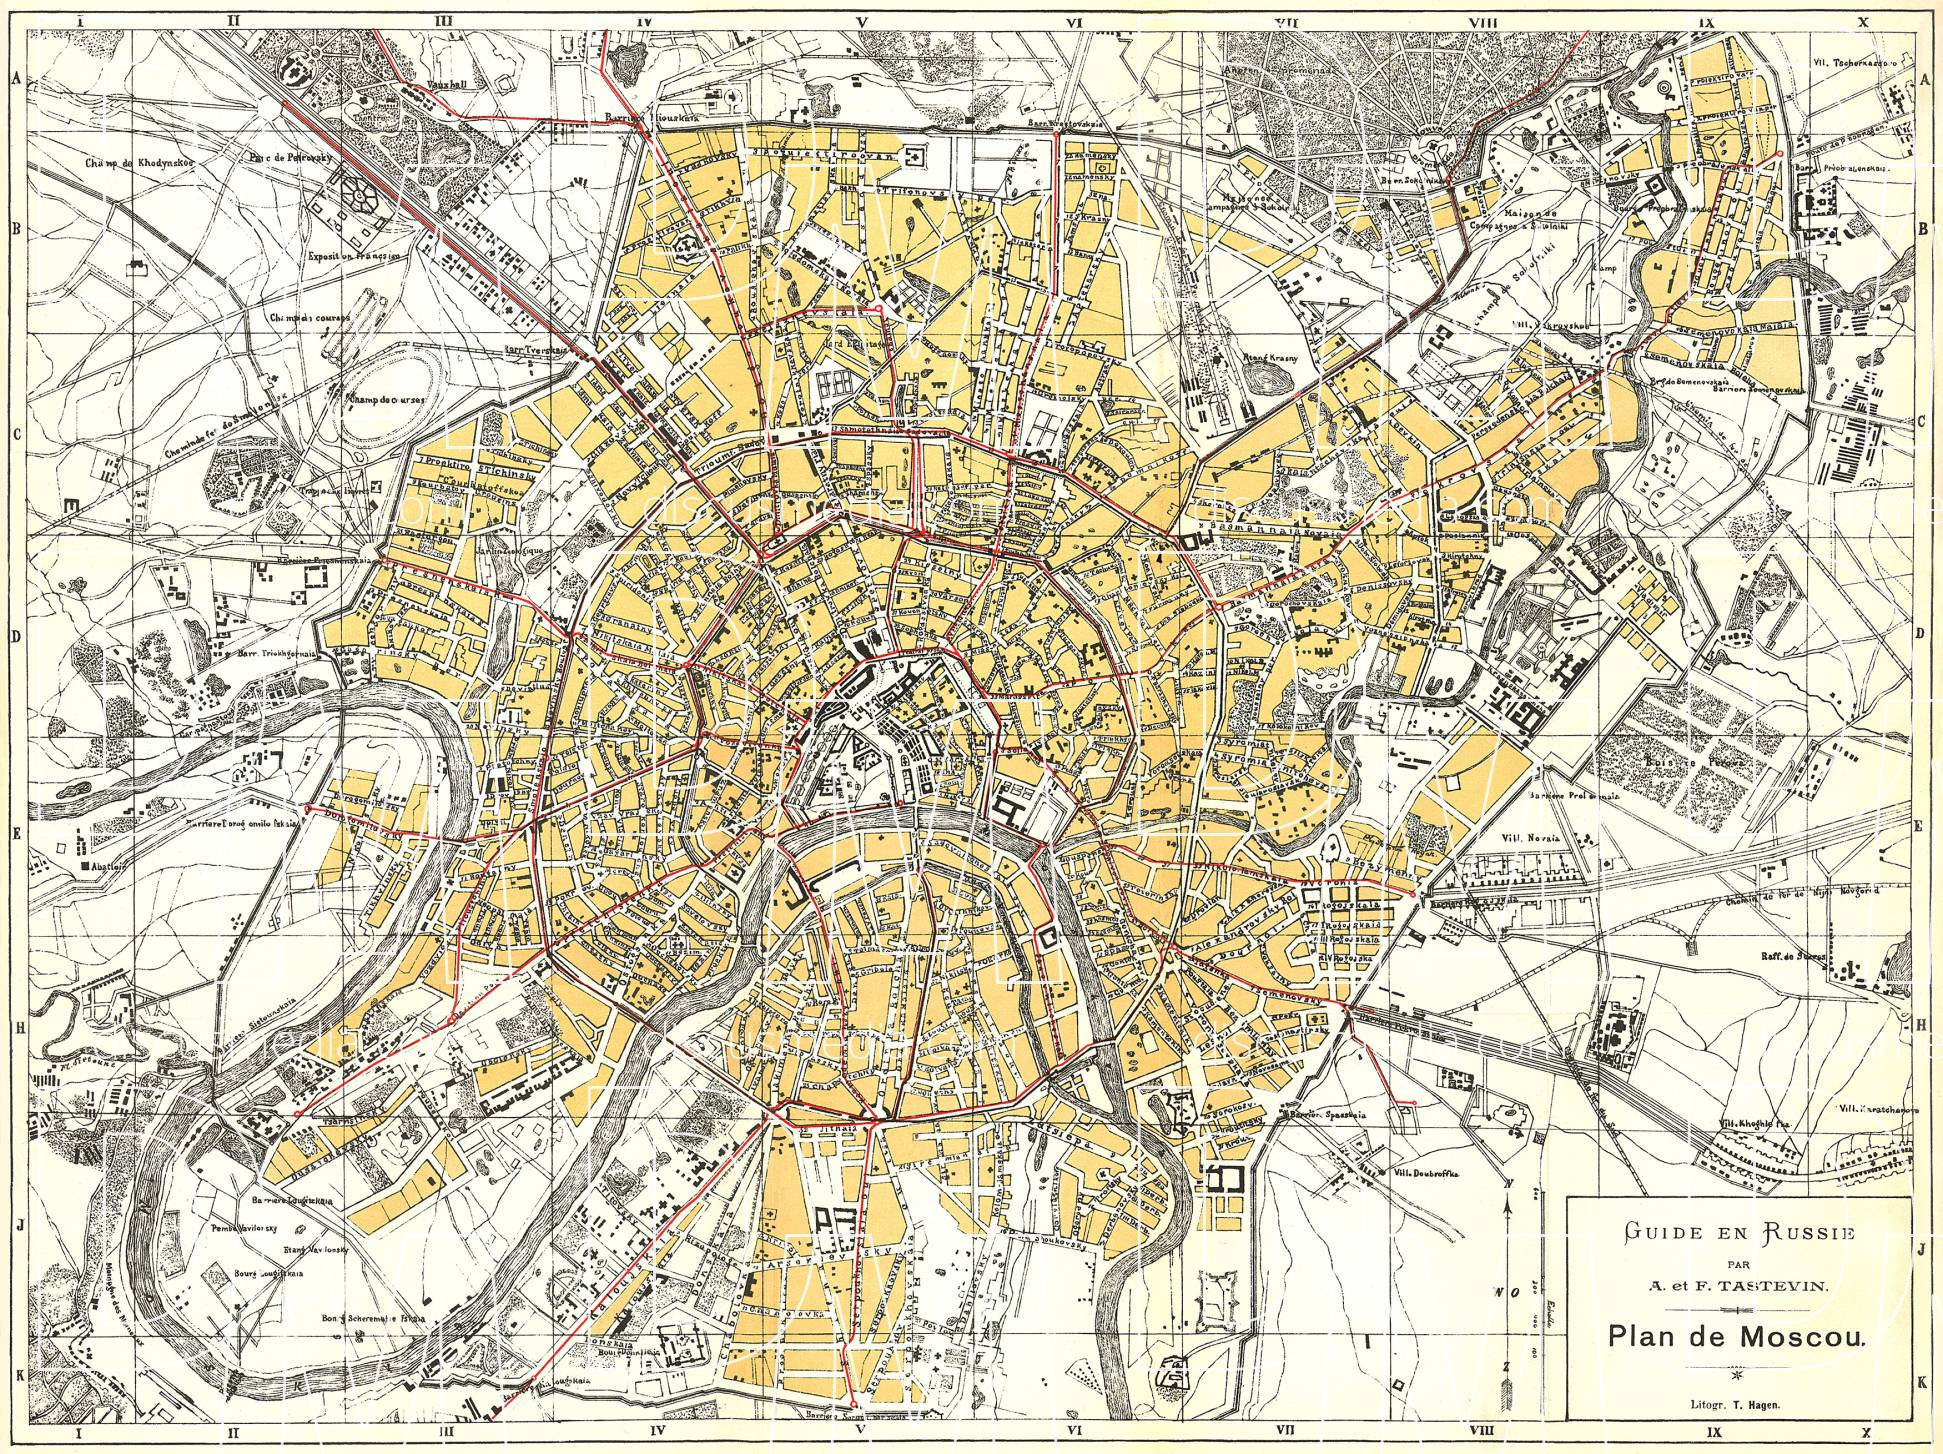 Город москва на карте по истории